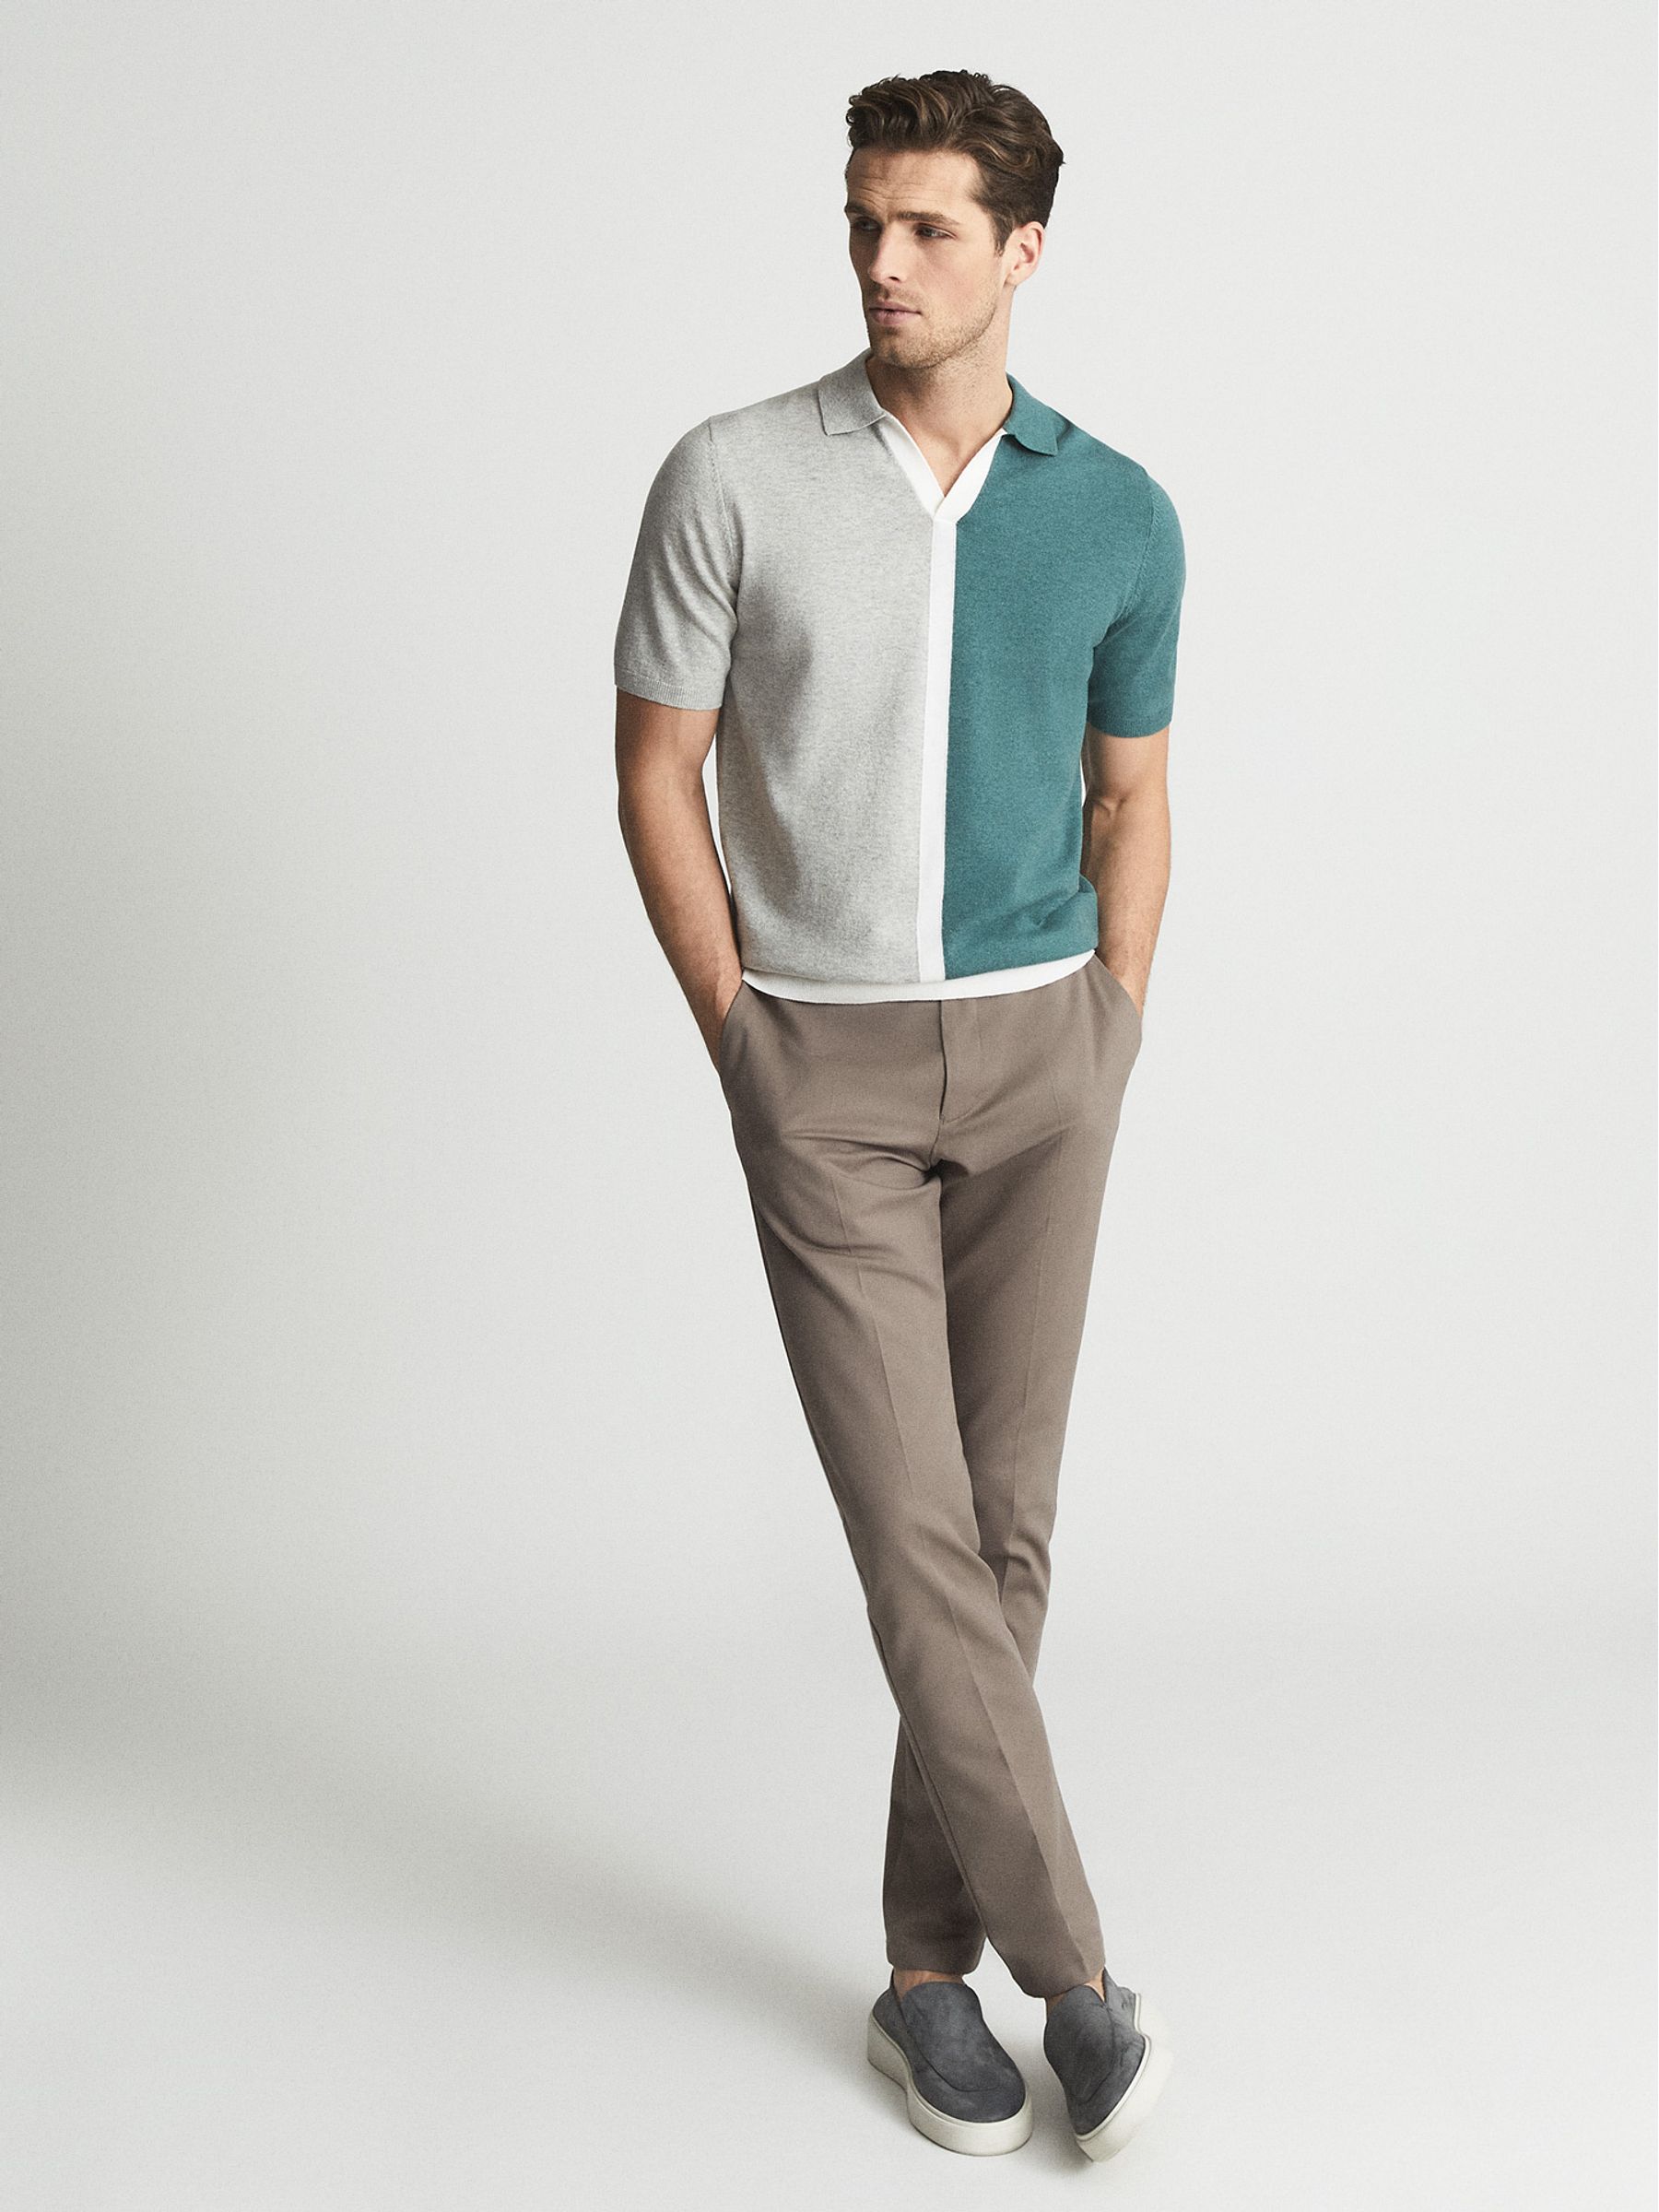 Reiss Marcus Colourblock Knitted Polo T-Shirt | REISS USA